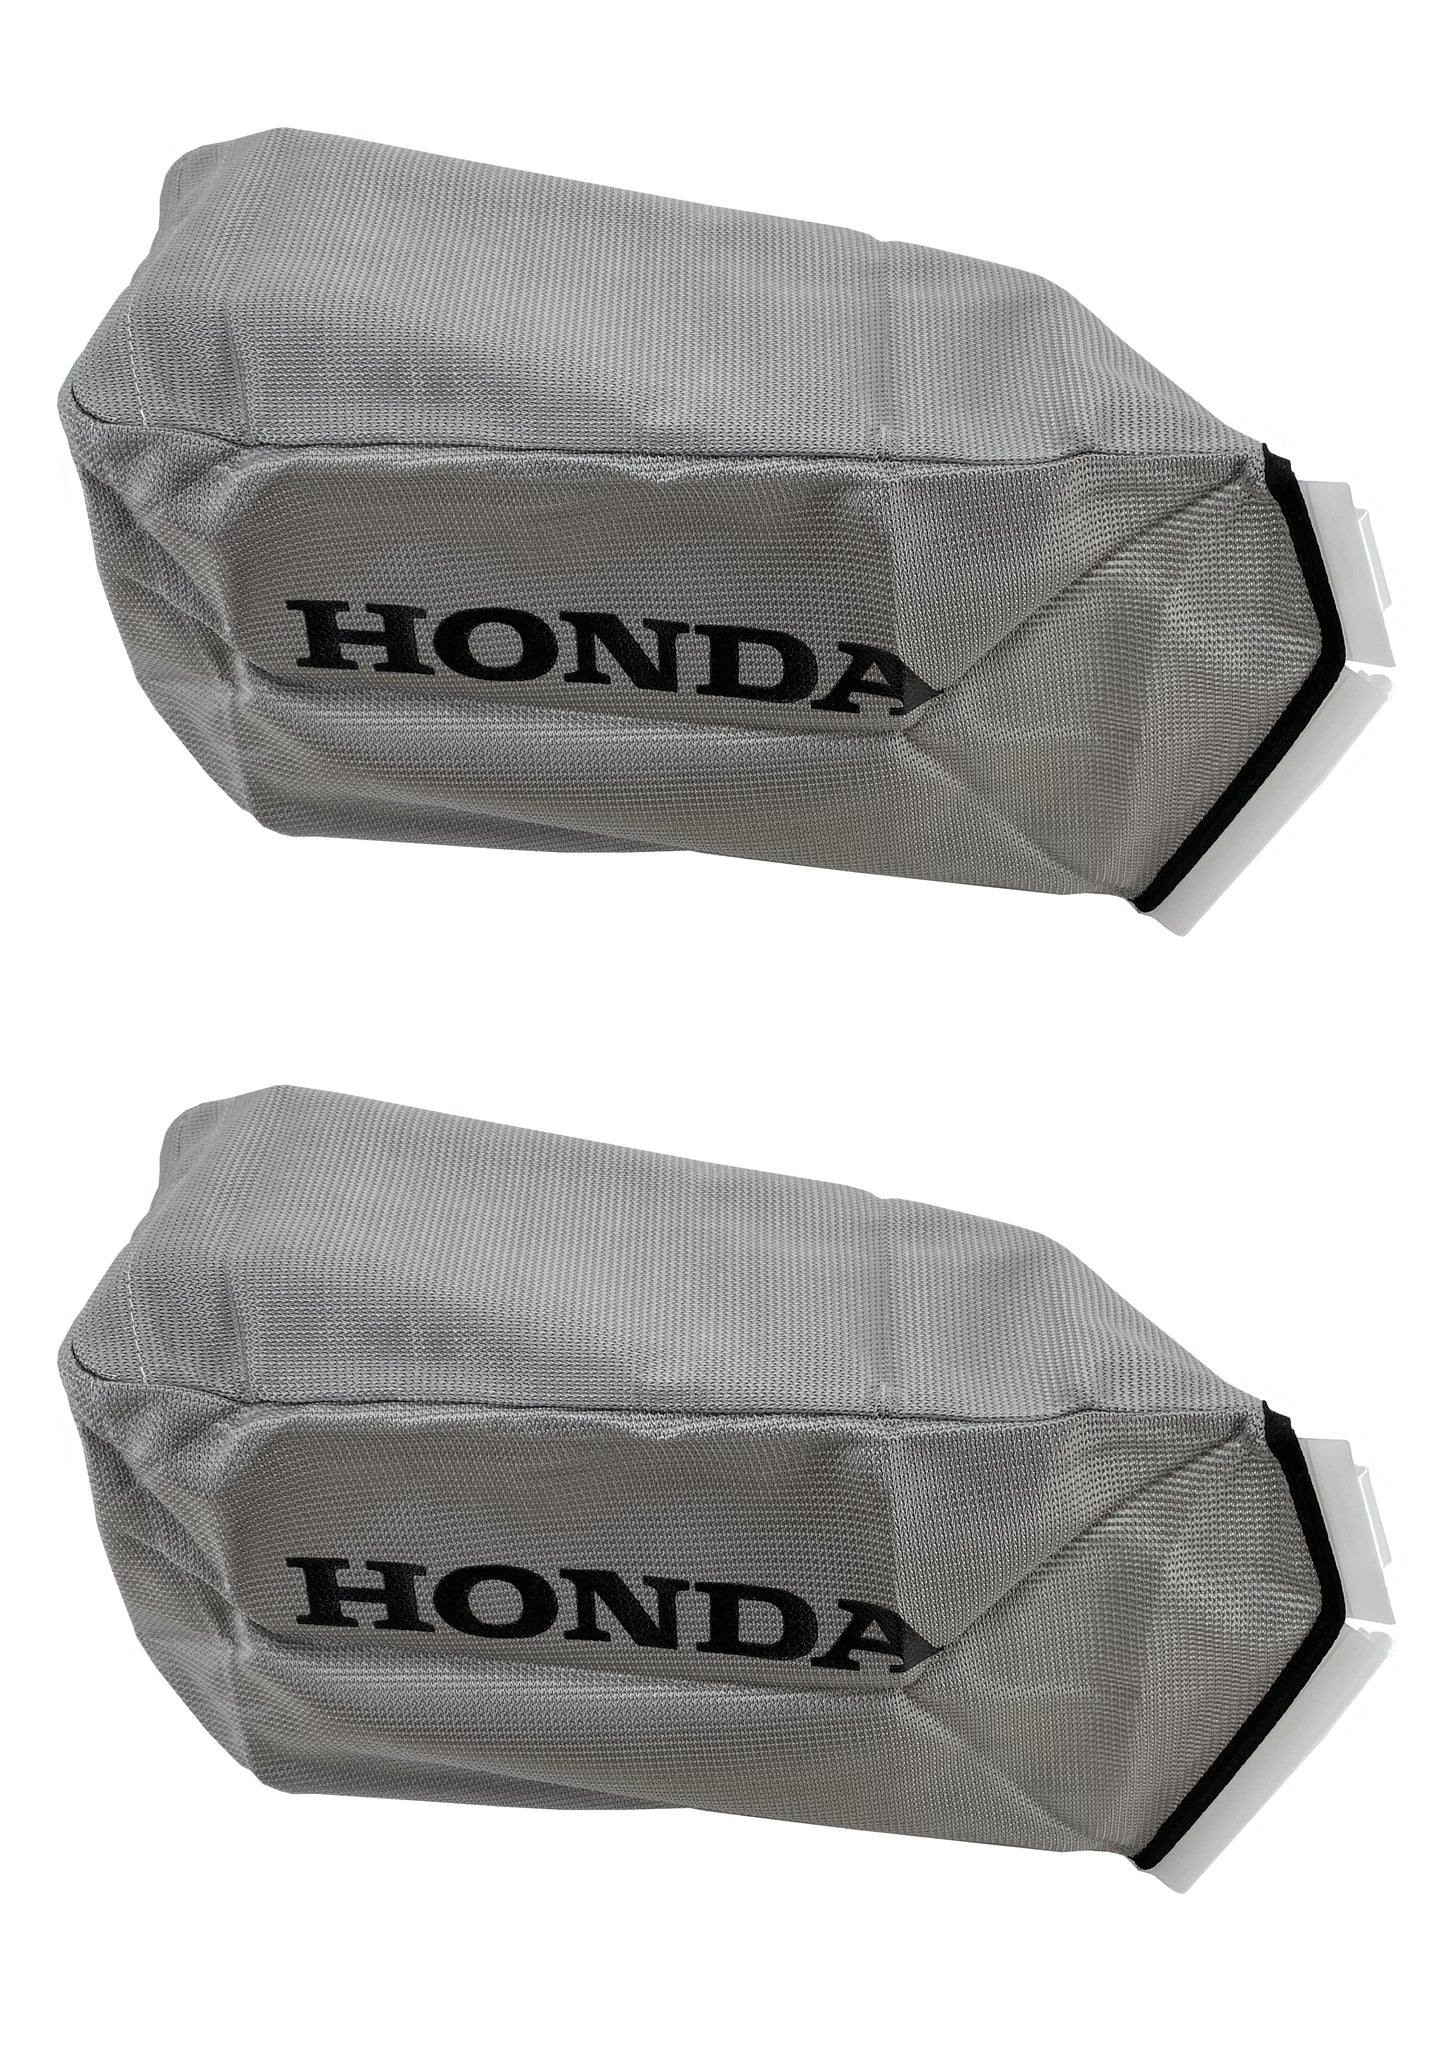 Honda Original Equipment Grass Bag Fabric (2 Pack) - 81320-VH7-D00